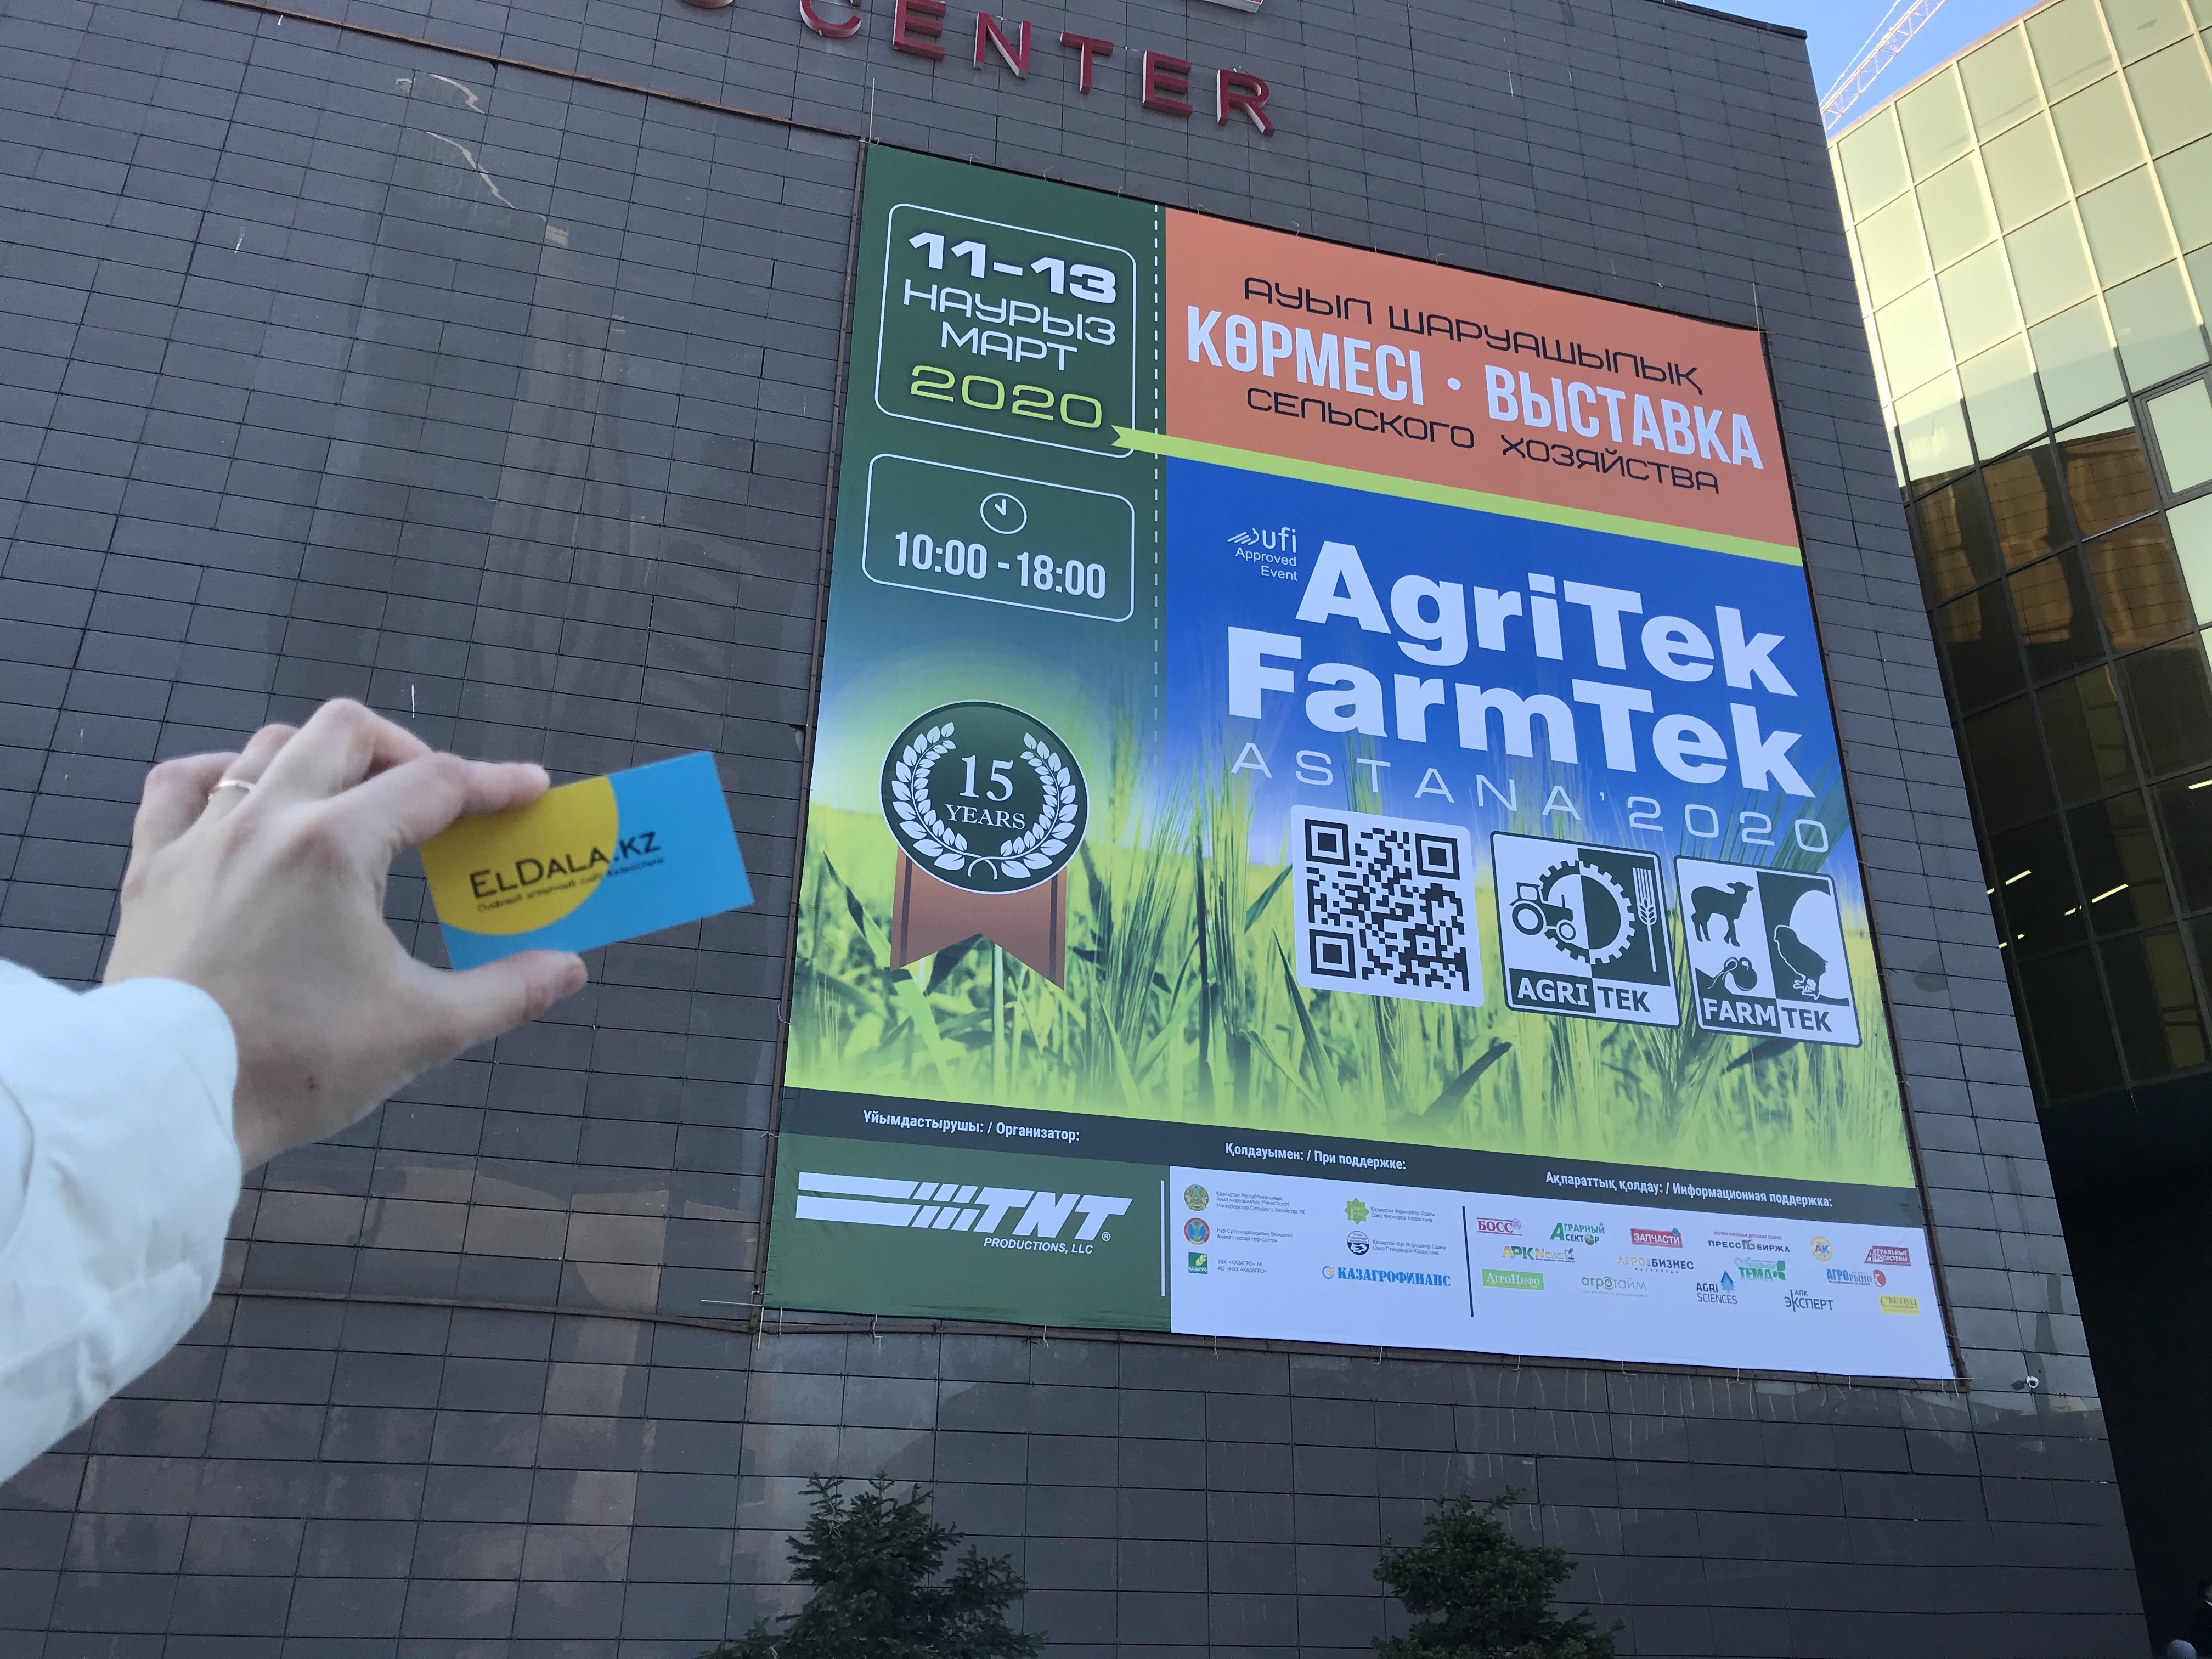 AgriTek/FarmTek Astana 2020: обзор выставки (ОНЛАЙН-ТРАНСЛЯЦИЯ)